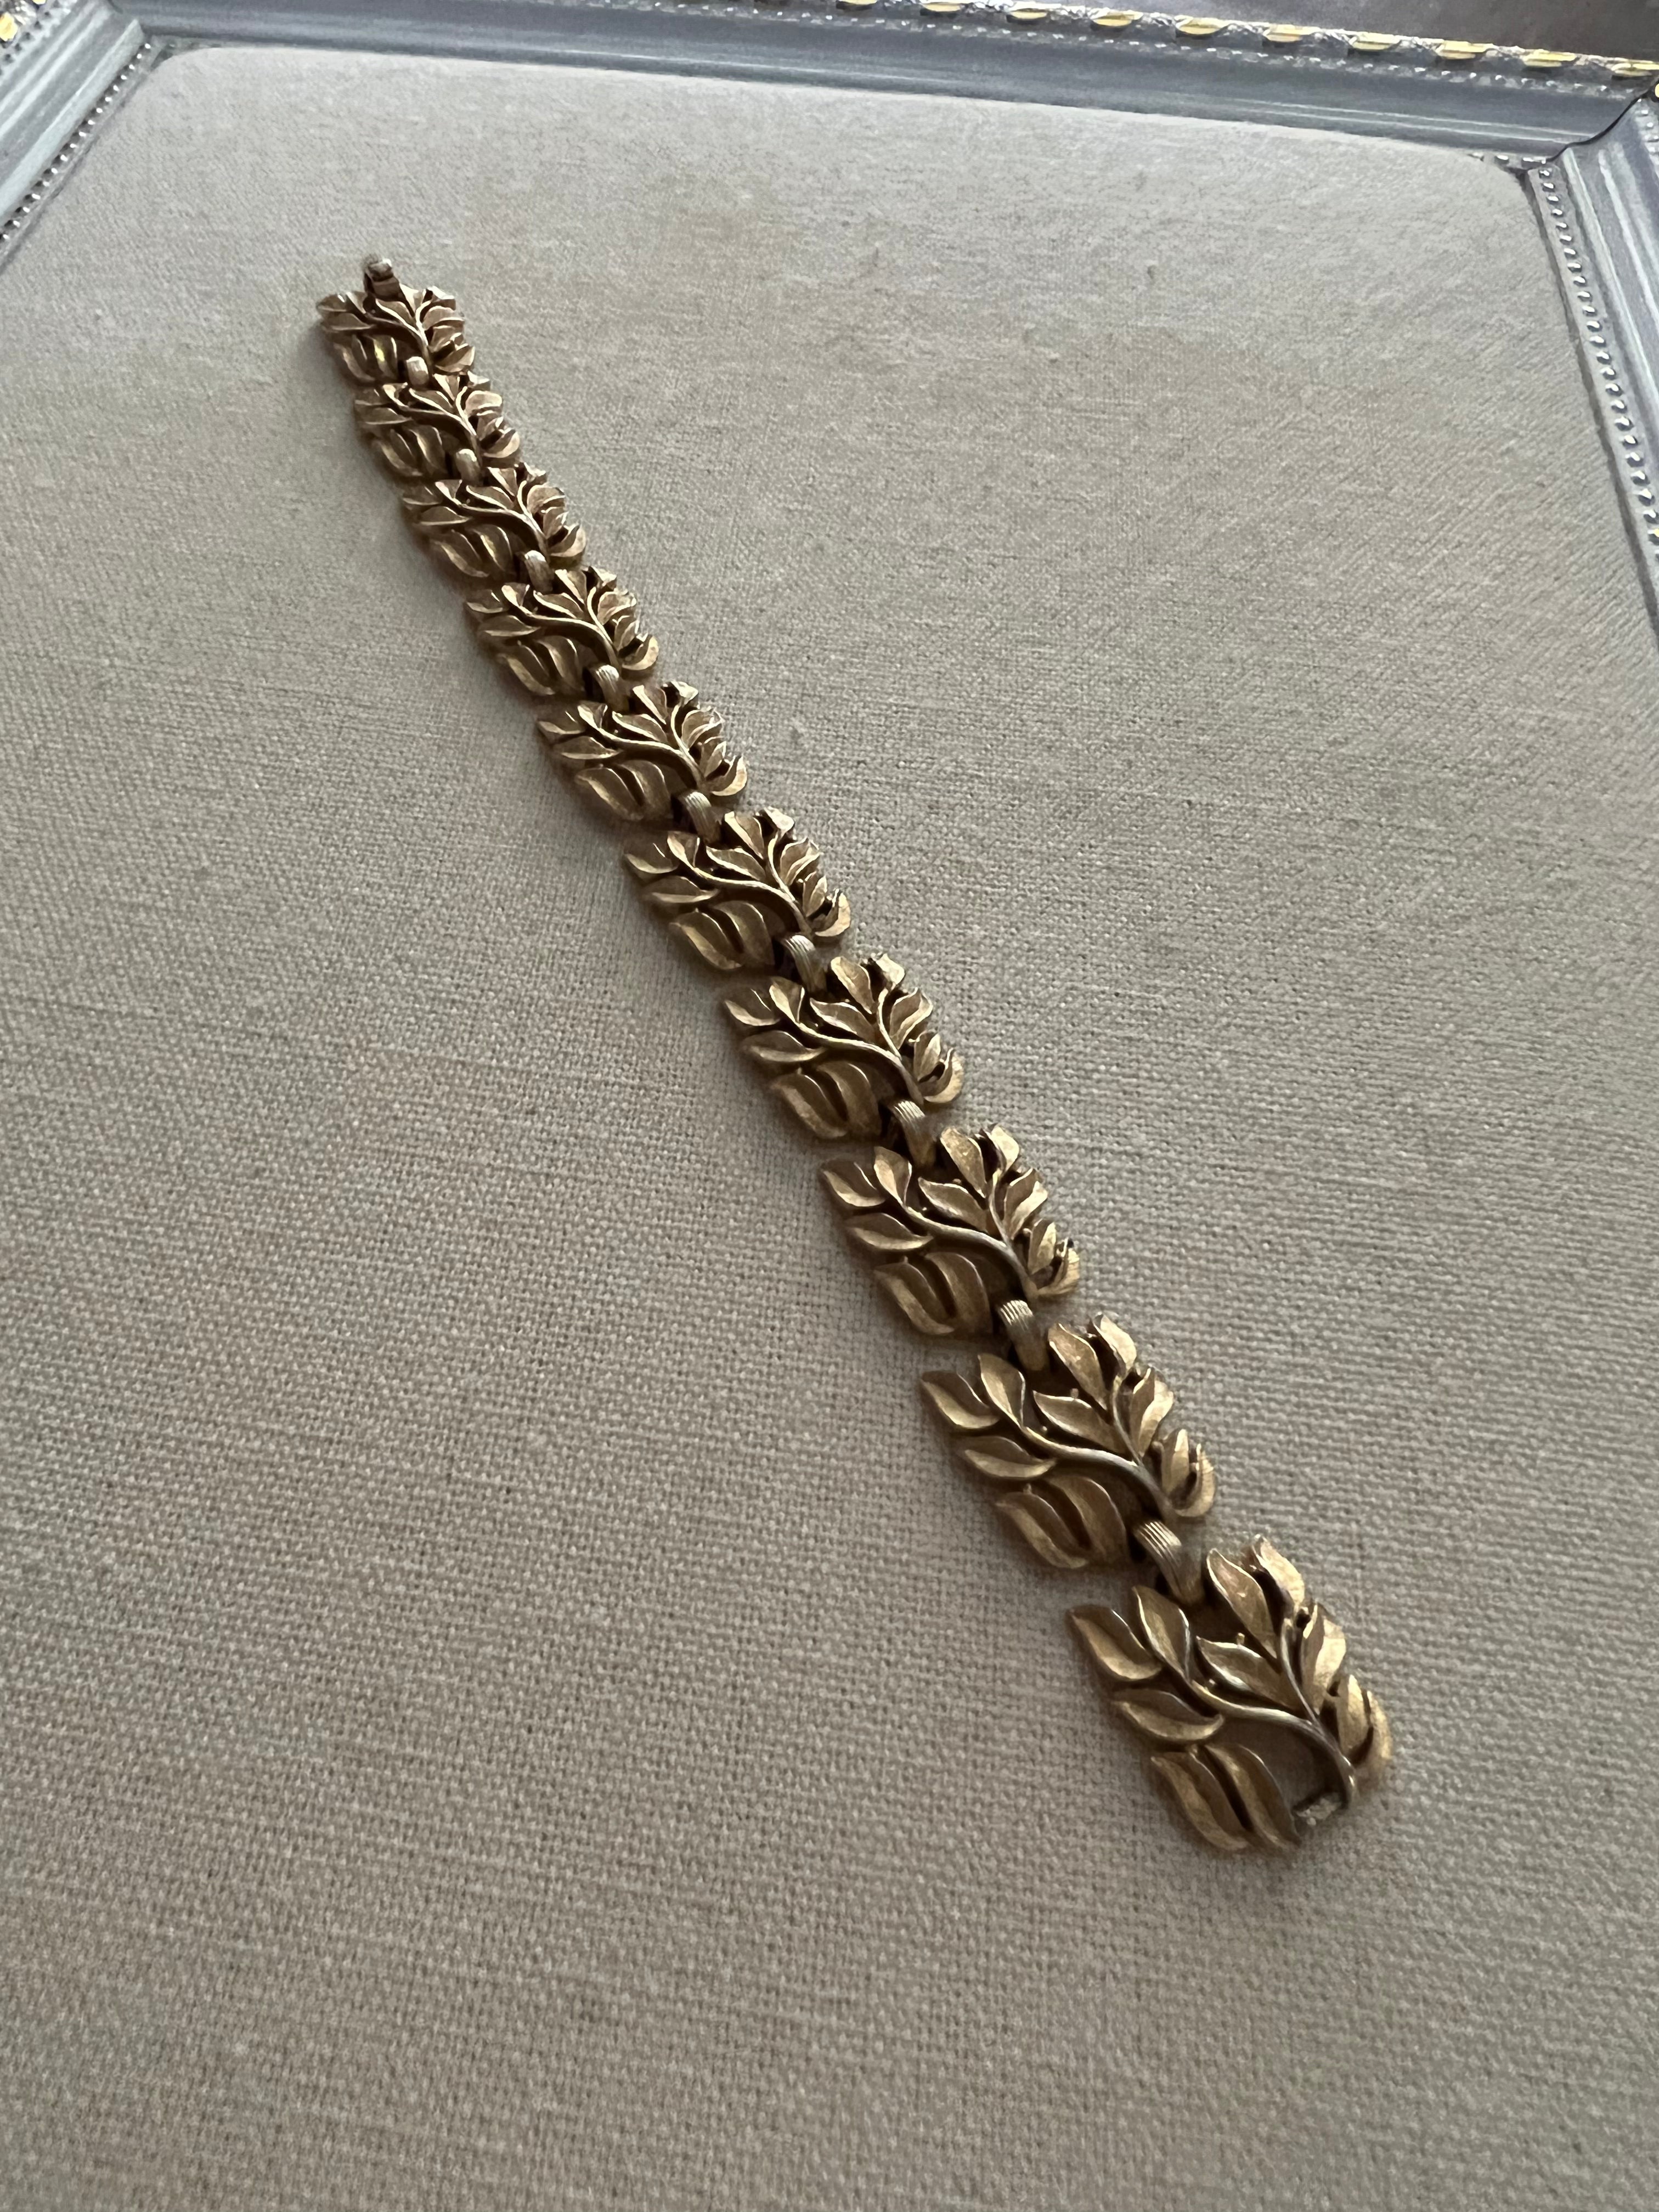 Trifari Vintage Gold Bracelet